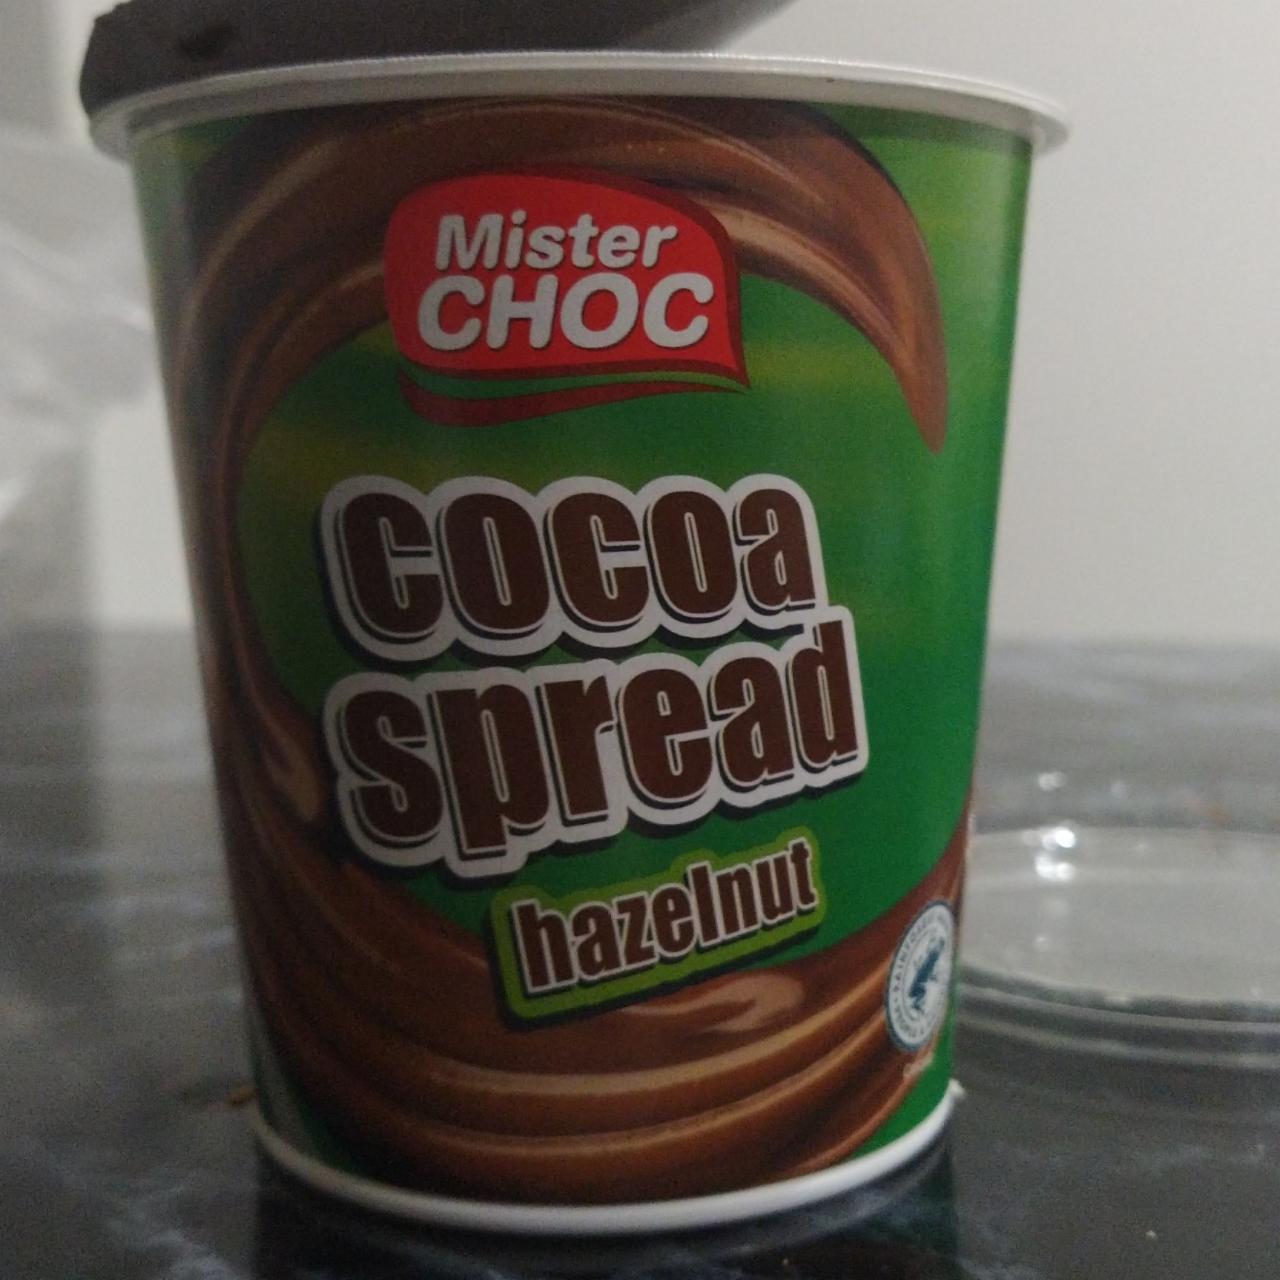 Fotografie - Cocoa spread hazelnut Mister choc